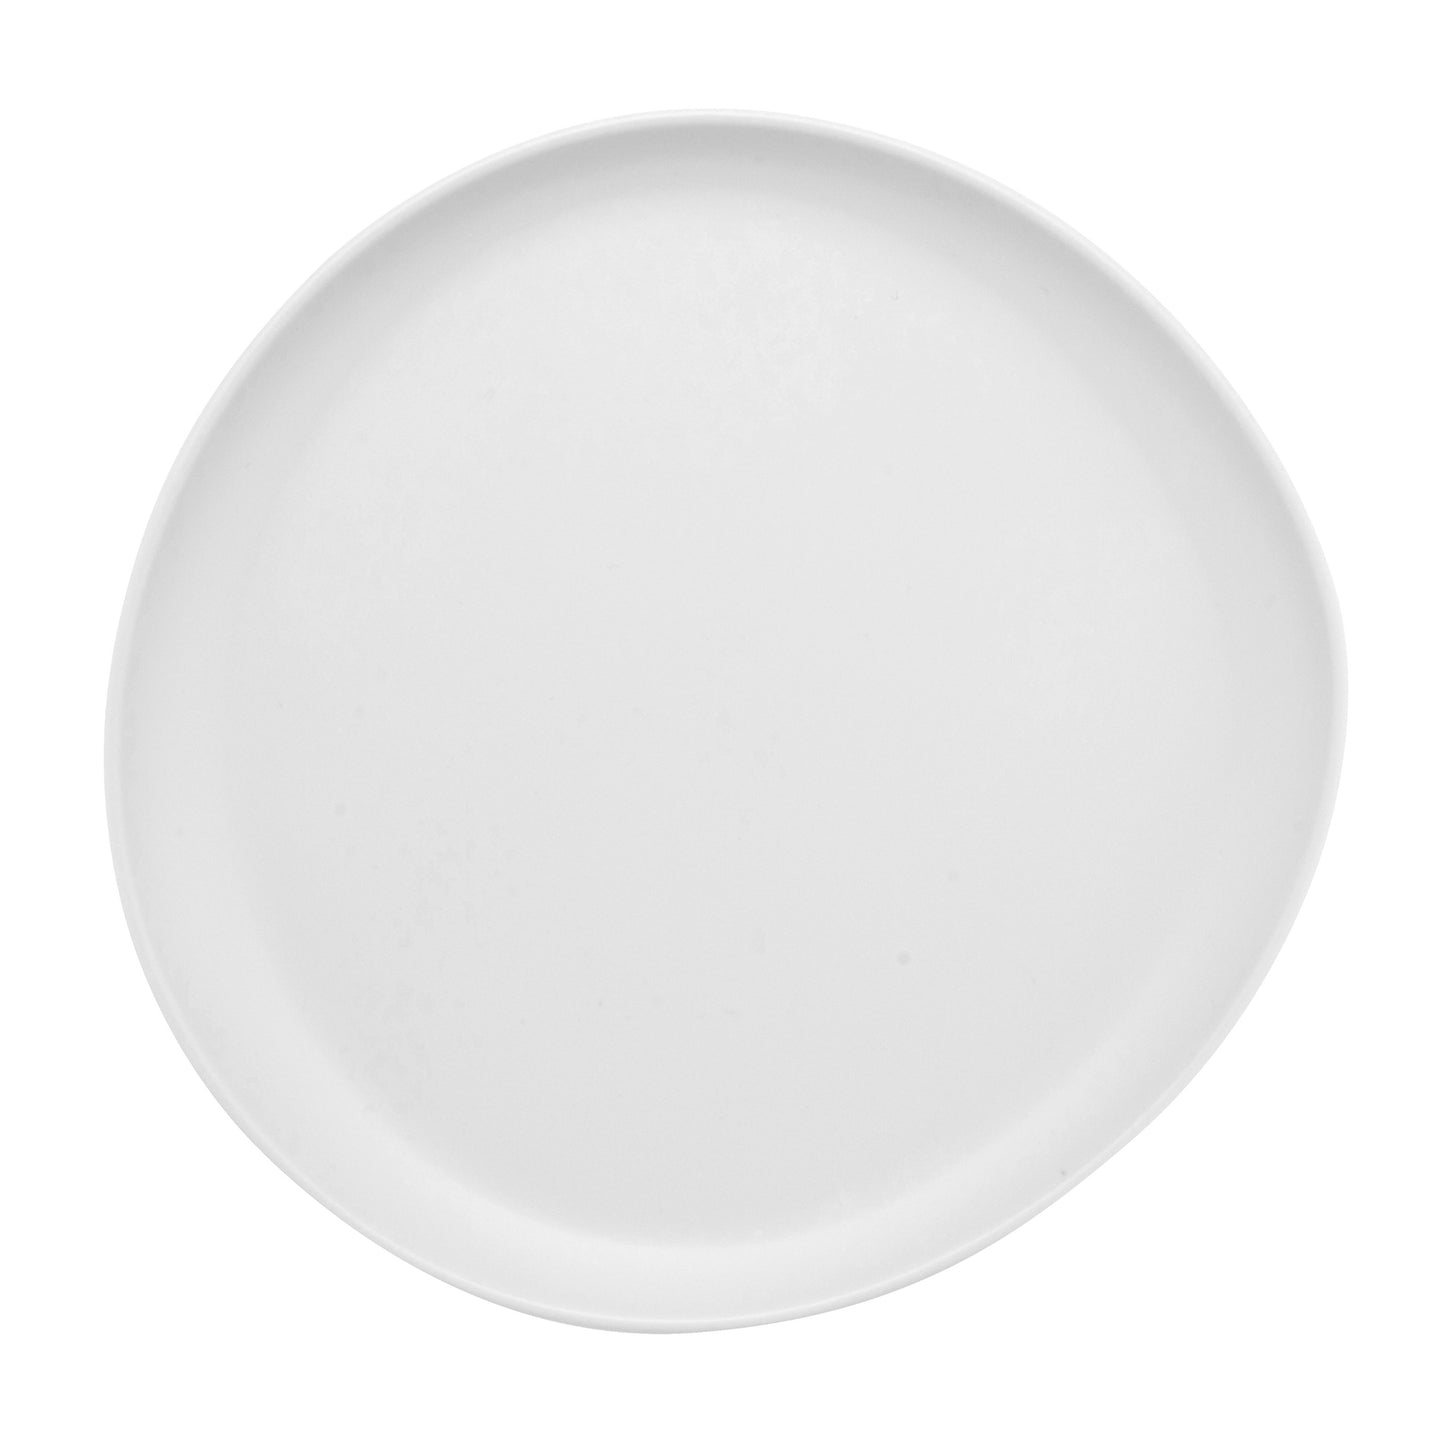 7" White, Melamine, Small Round Coupe Bread Plate, G.E.T. Riverstone (12 Pack)